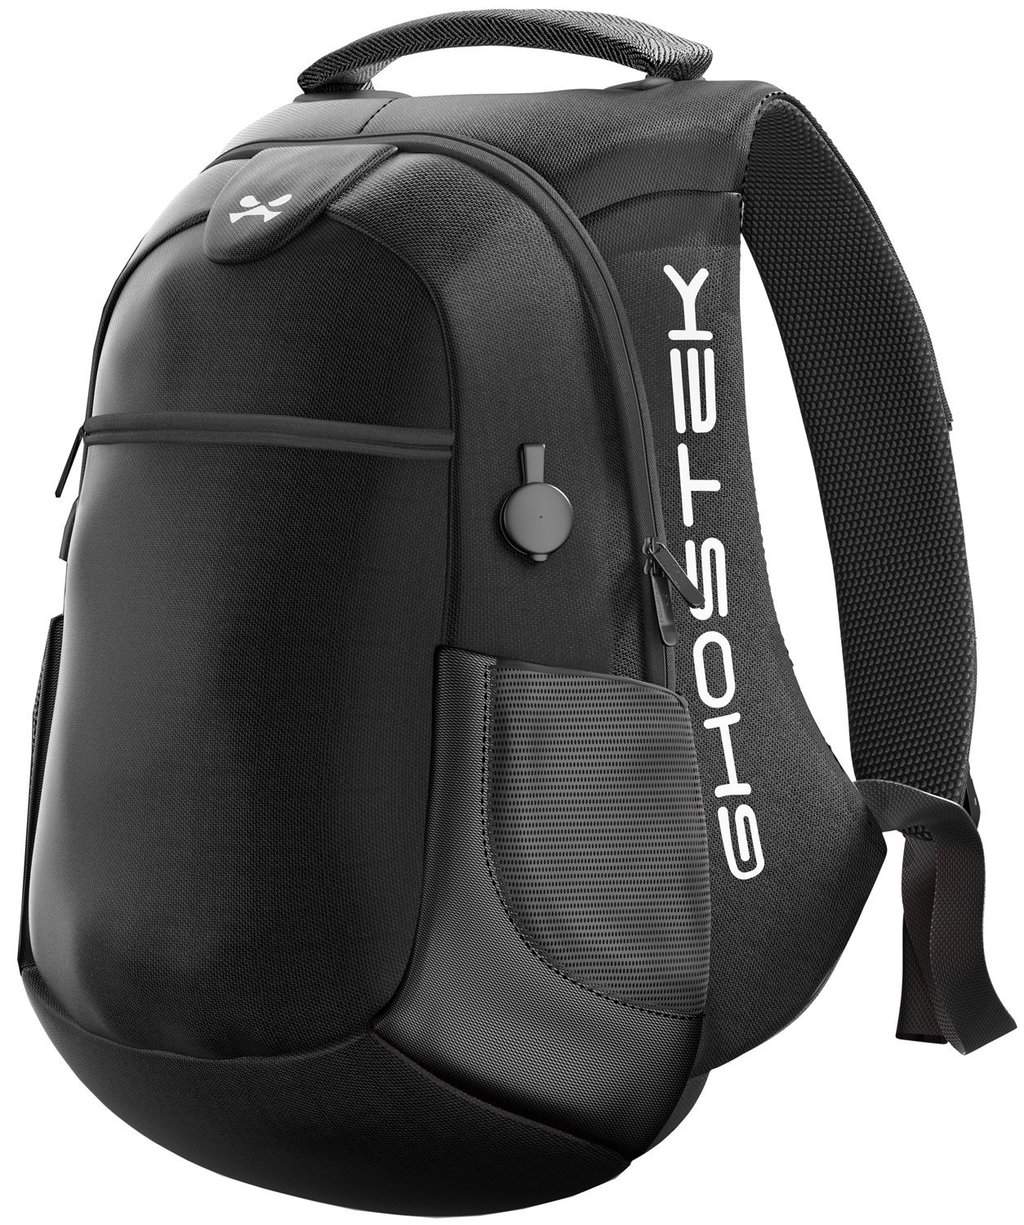 laptop backpacks for gamers